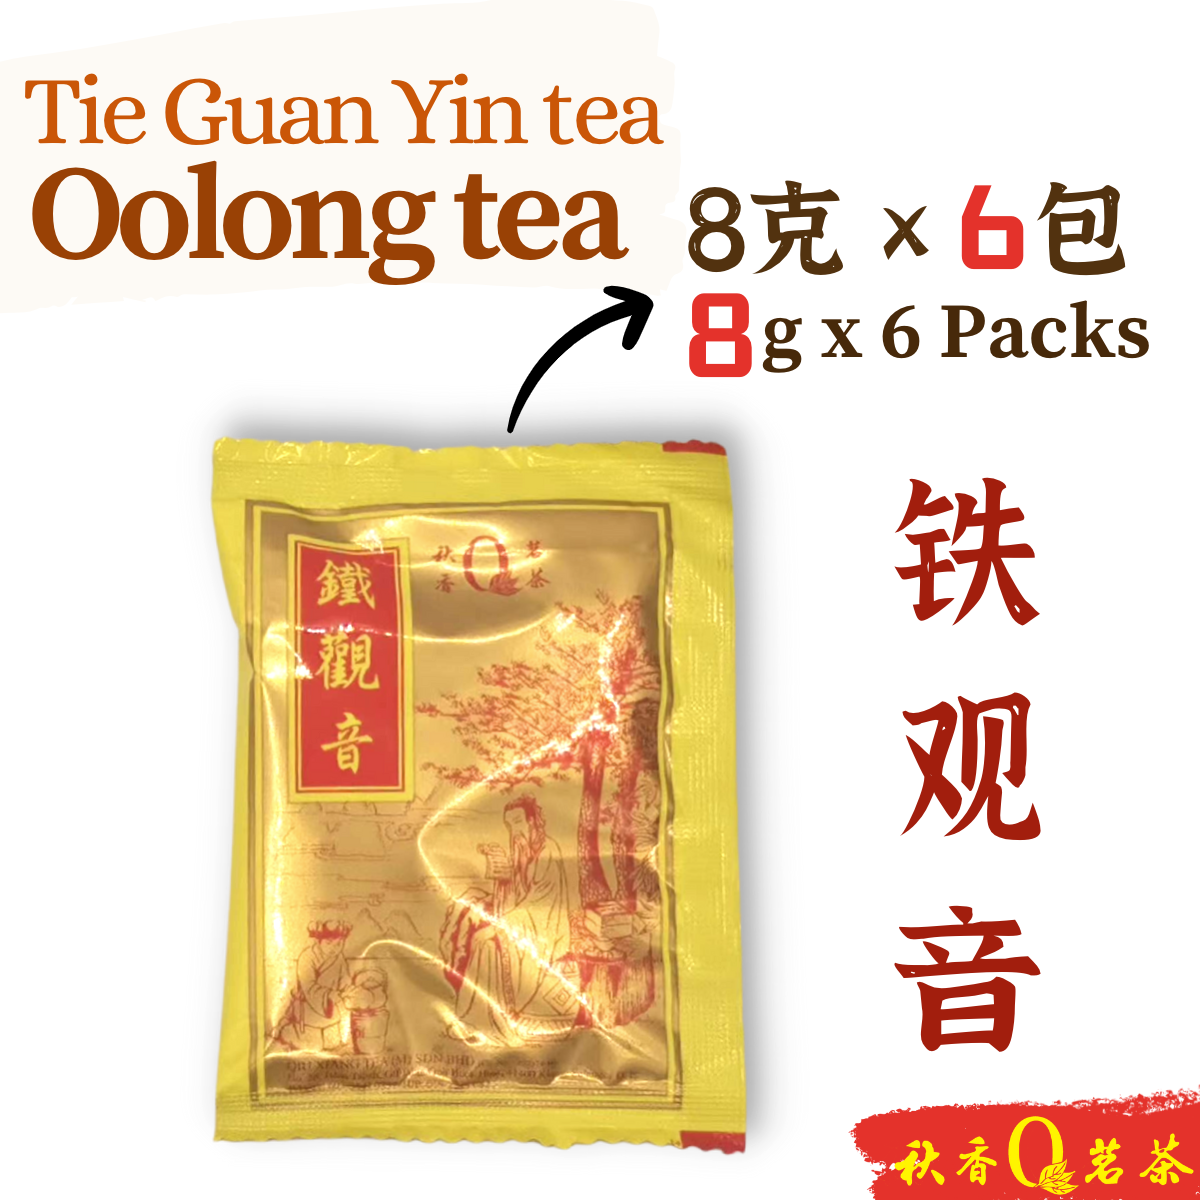 铁观音 Tie Guan Yin tea【6 Packs x 8g】|【乌龙茶 Oolong tea】